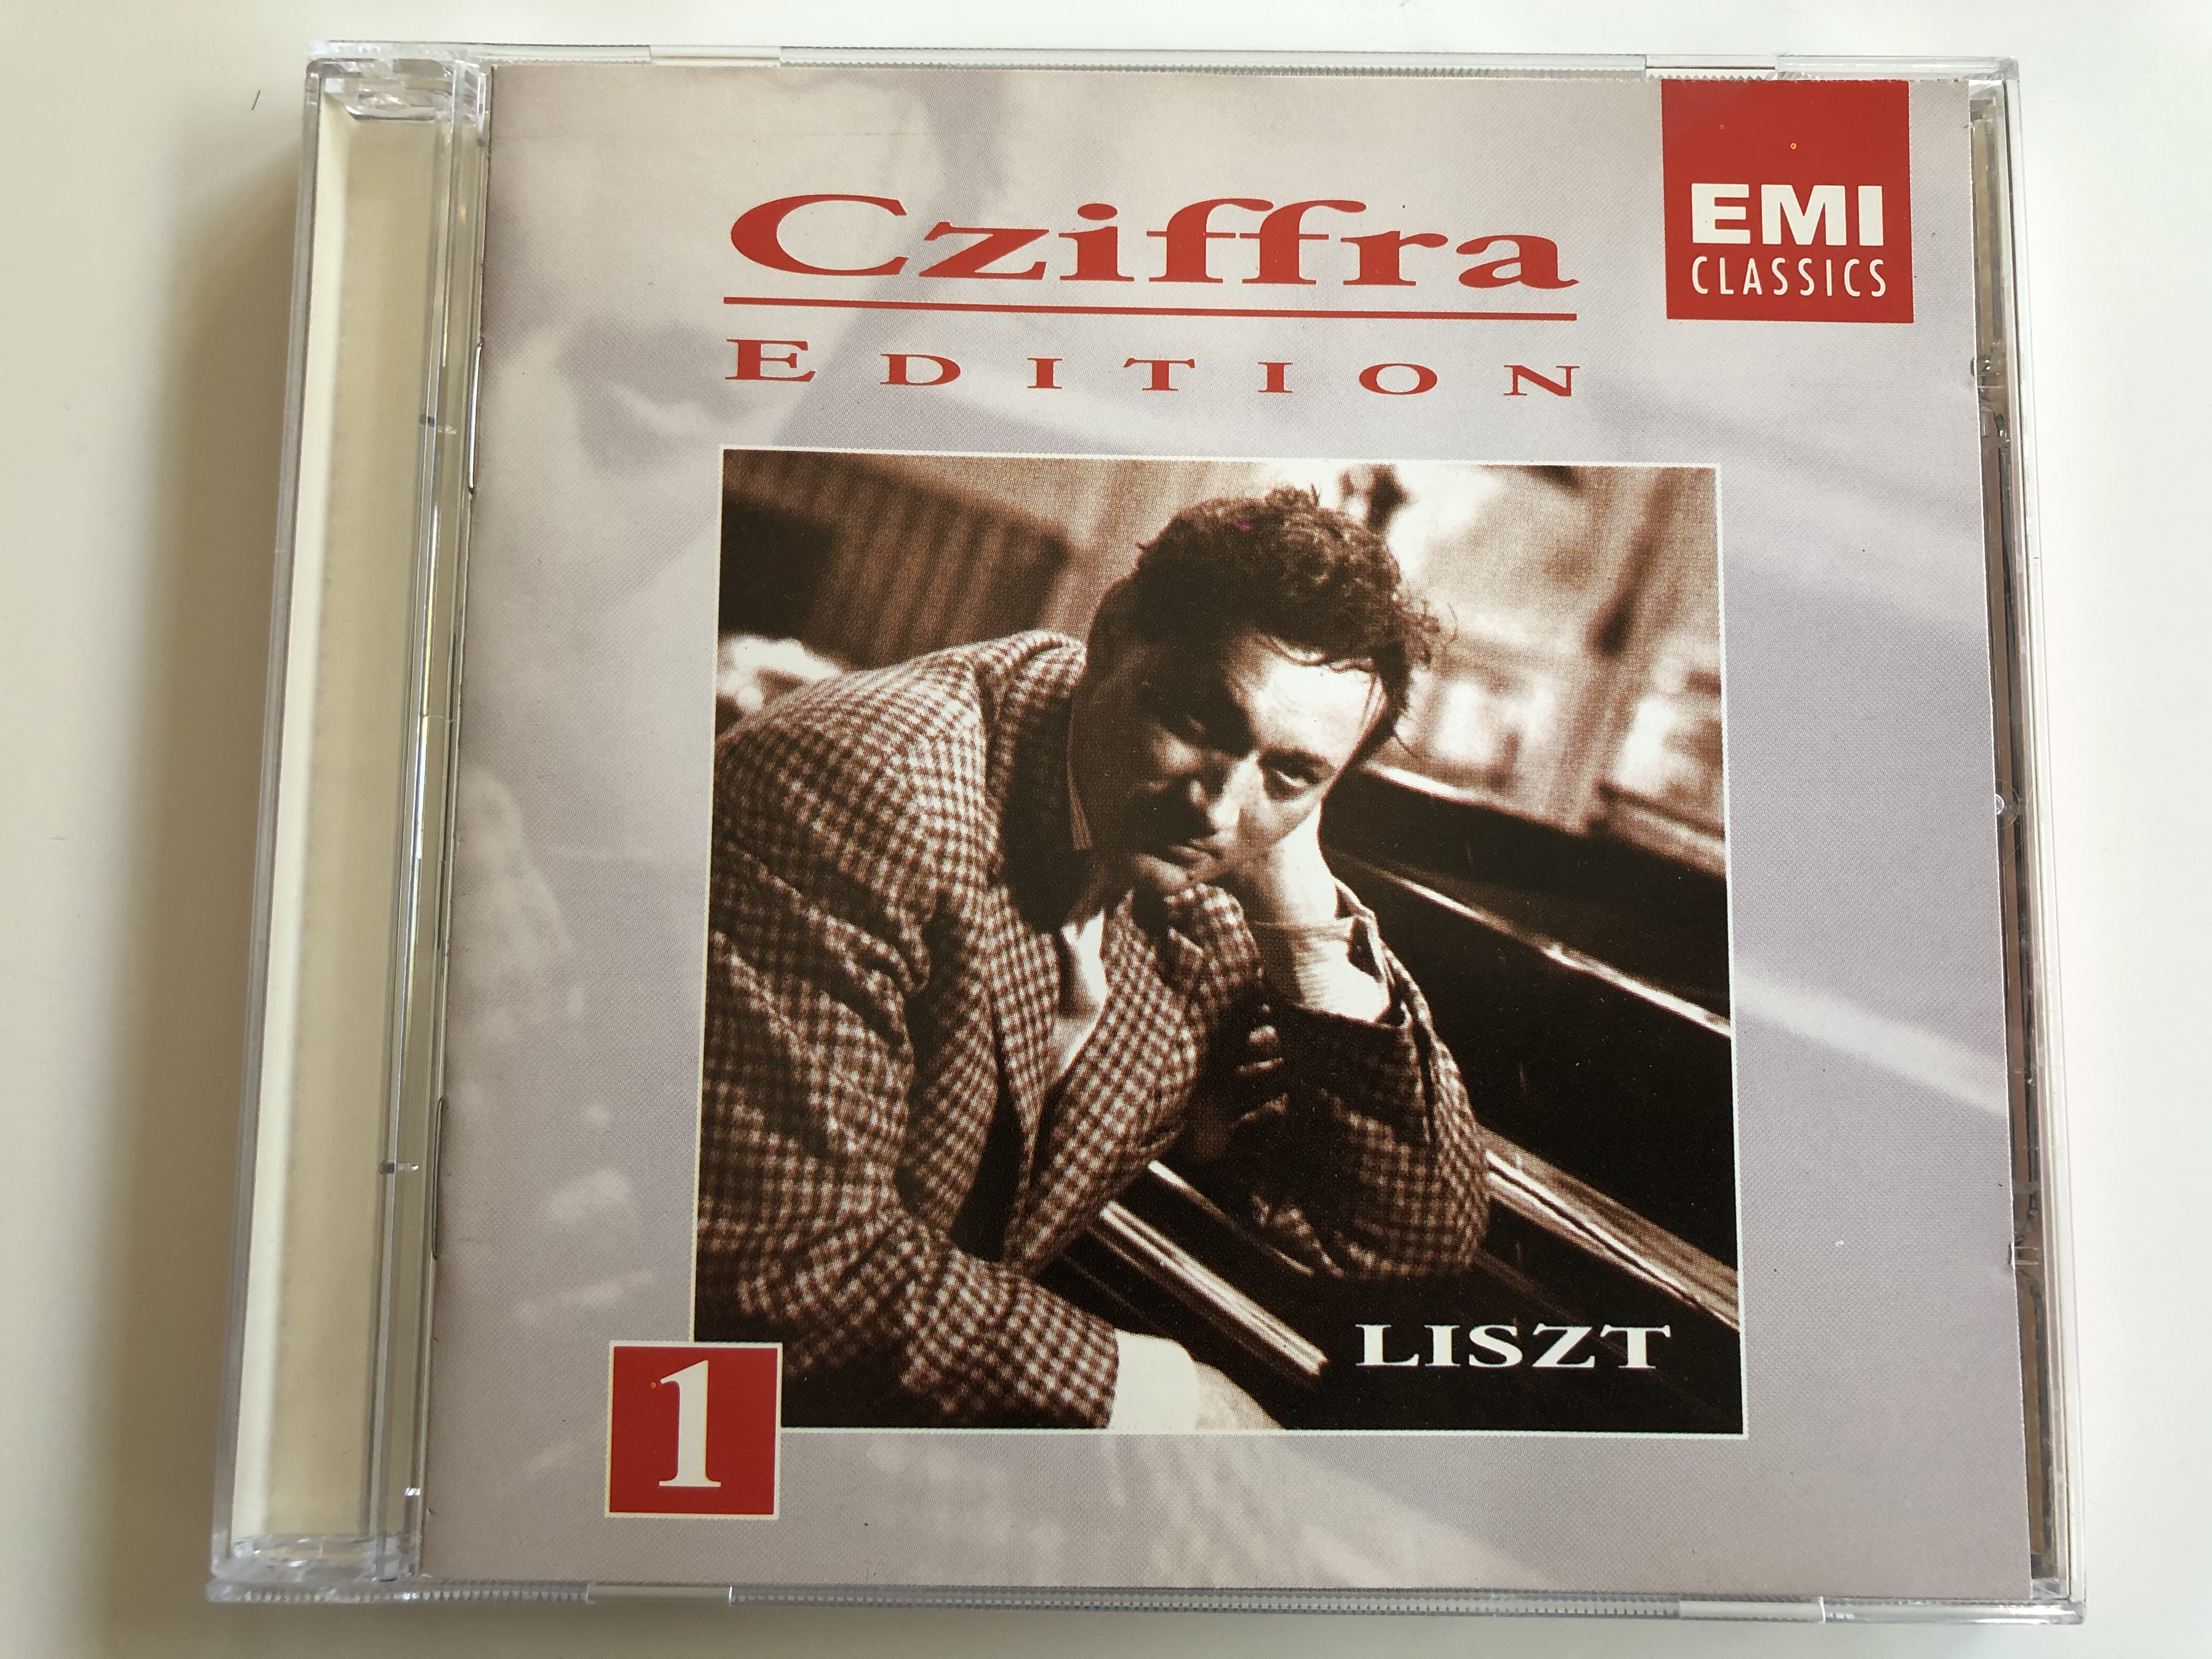 cziffra-edition-1-liszt-emi-classics-audio-cd-1994-stereo-mono-cdm-5652502-1-.jpg